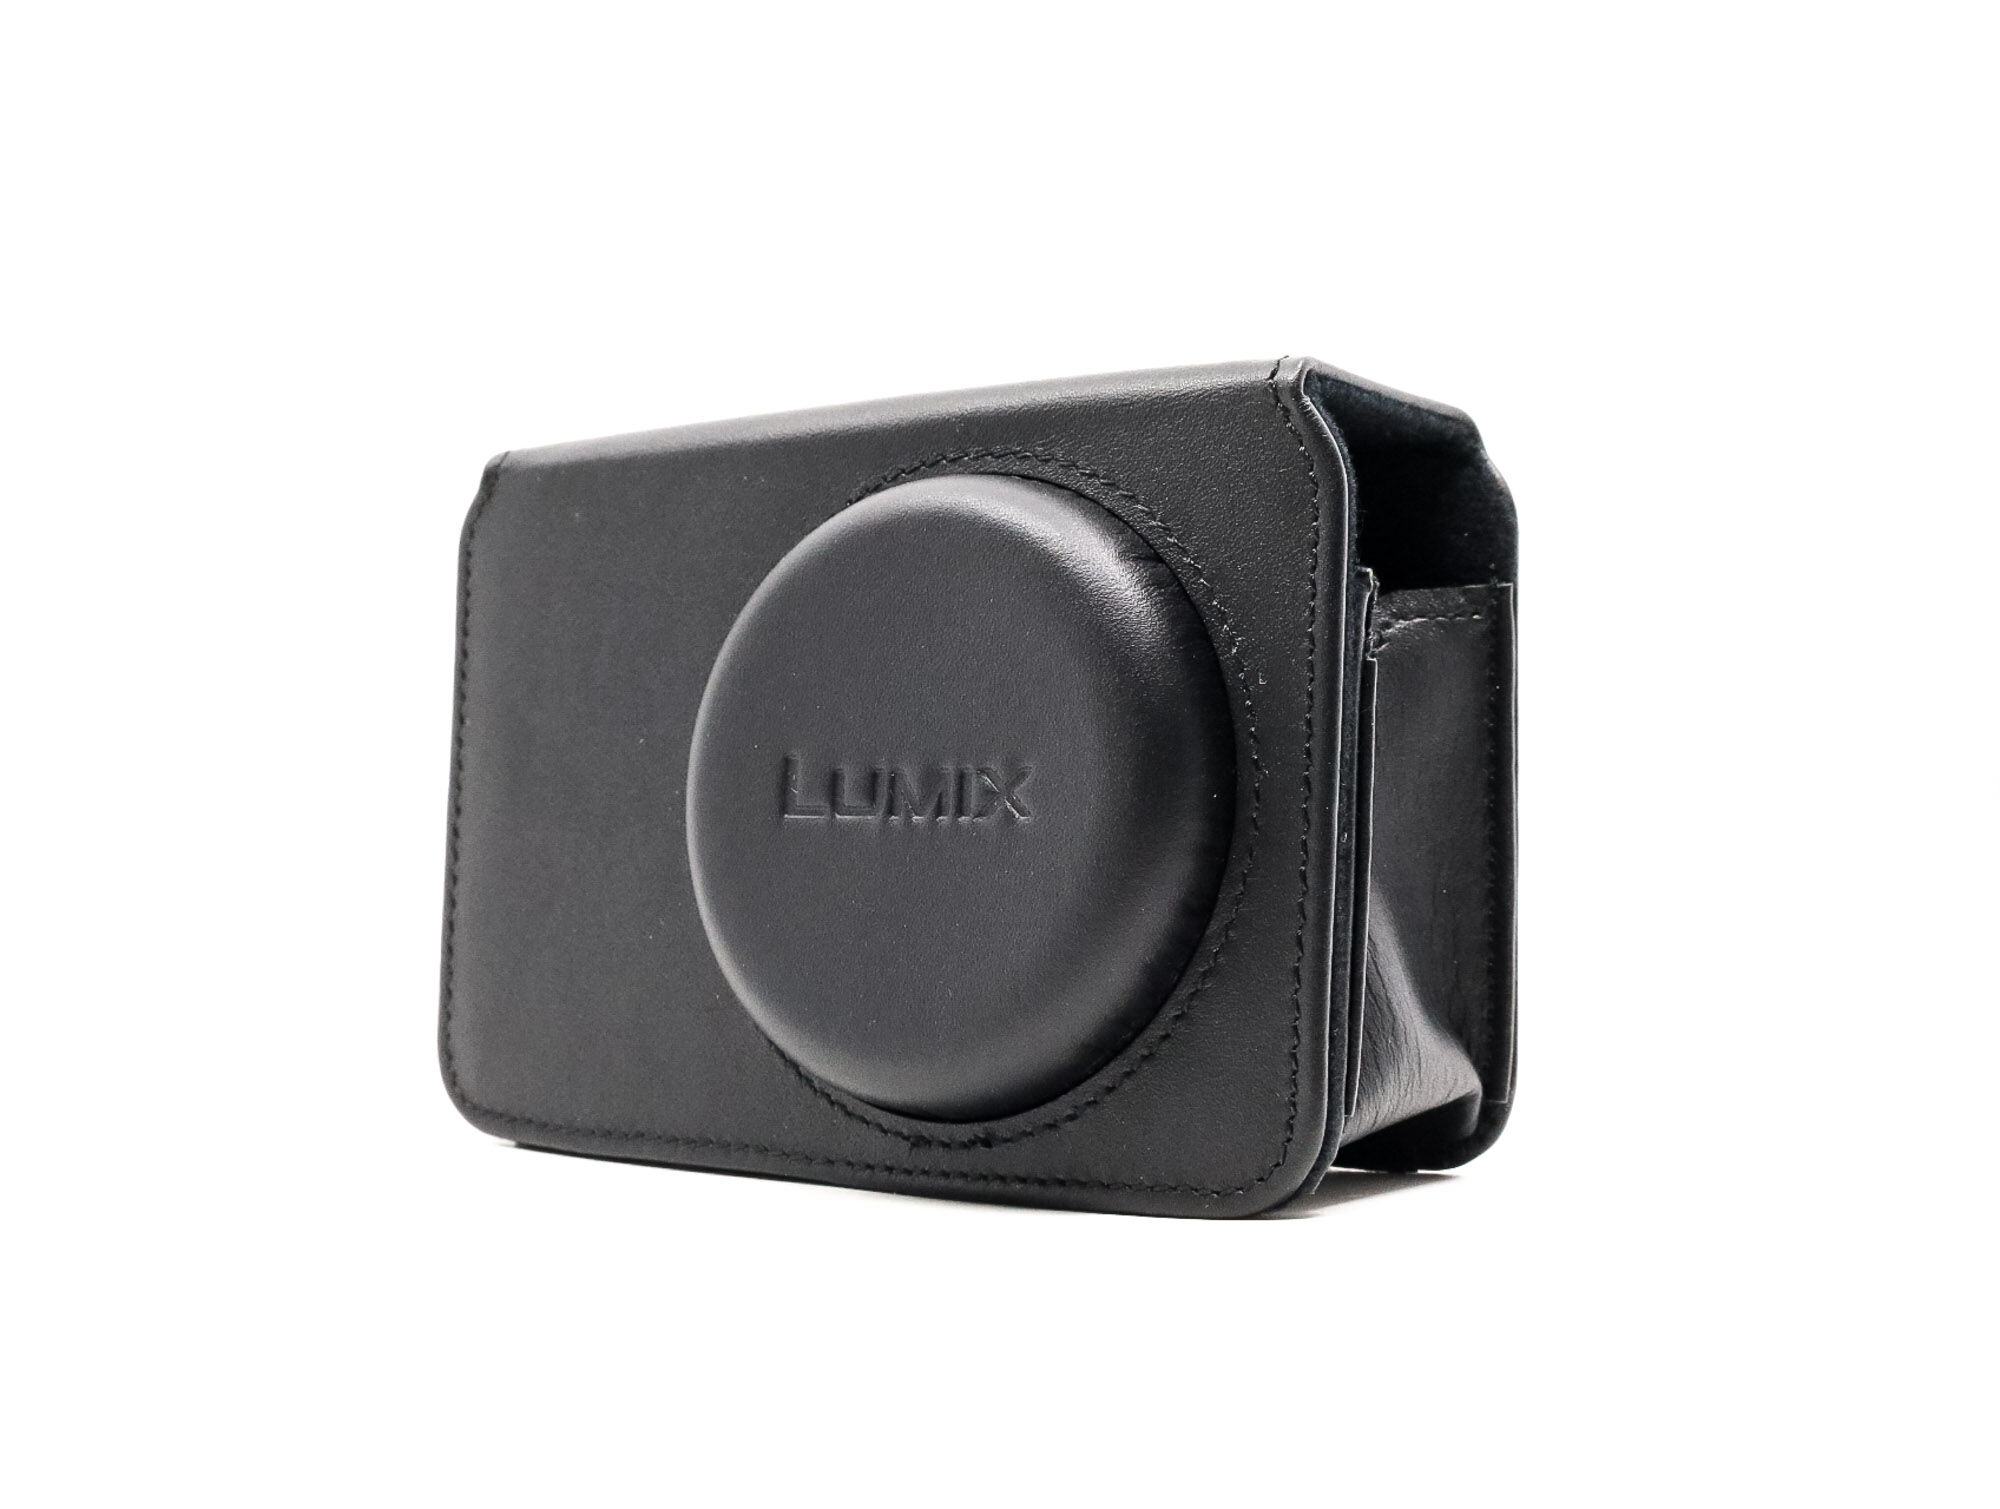 Used Panasonic LUMIX DMW-PHS84XEK Leather Case for TZ Cameras